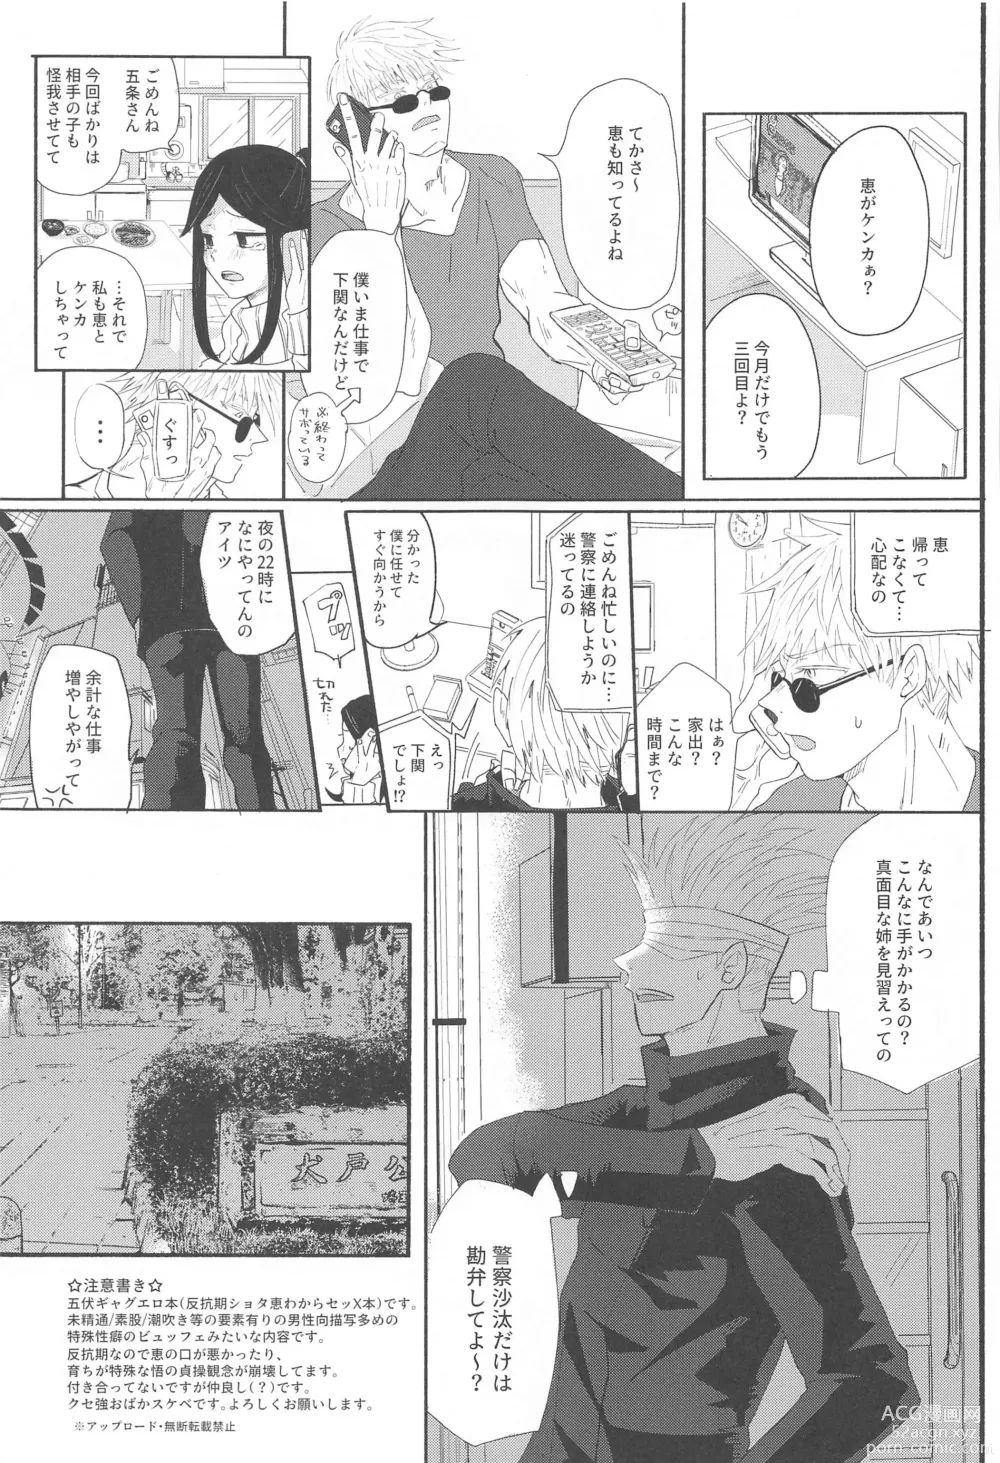 Page 2 of doujinshi Fusenai Inu